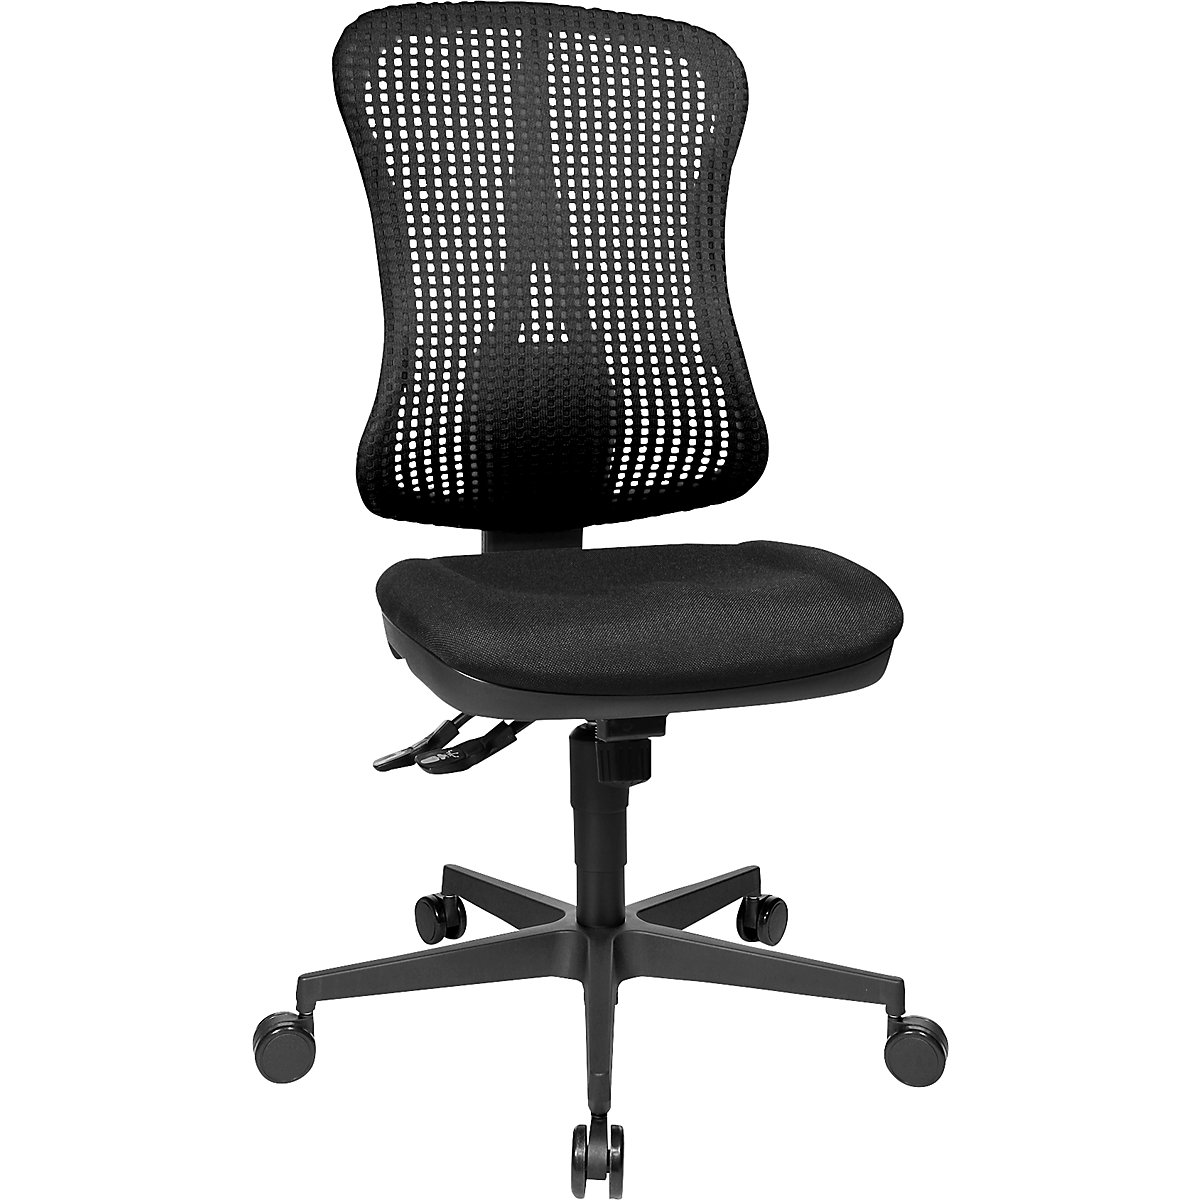 Ergonomic swivel chair, contoured seat - Topstar